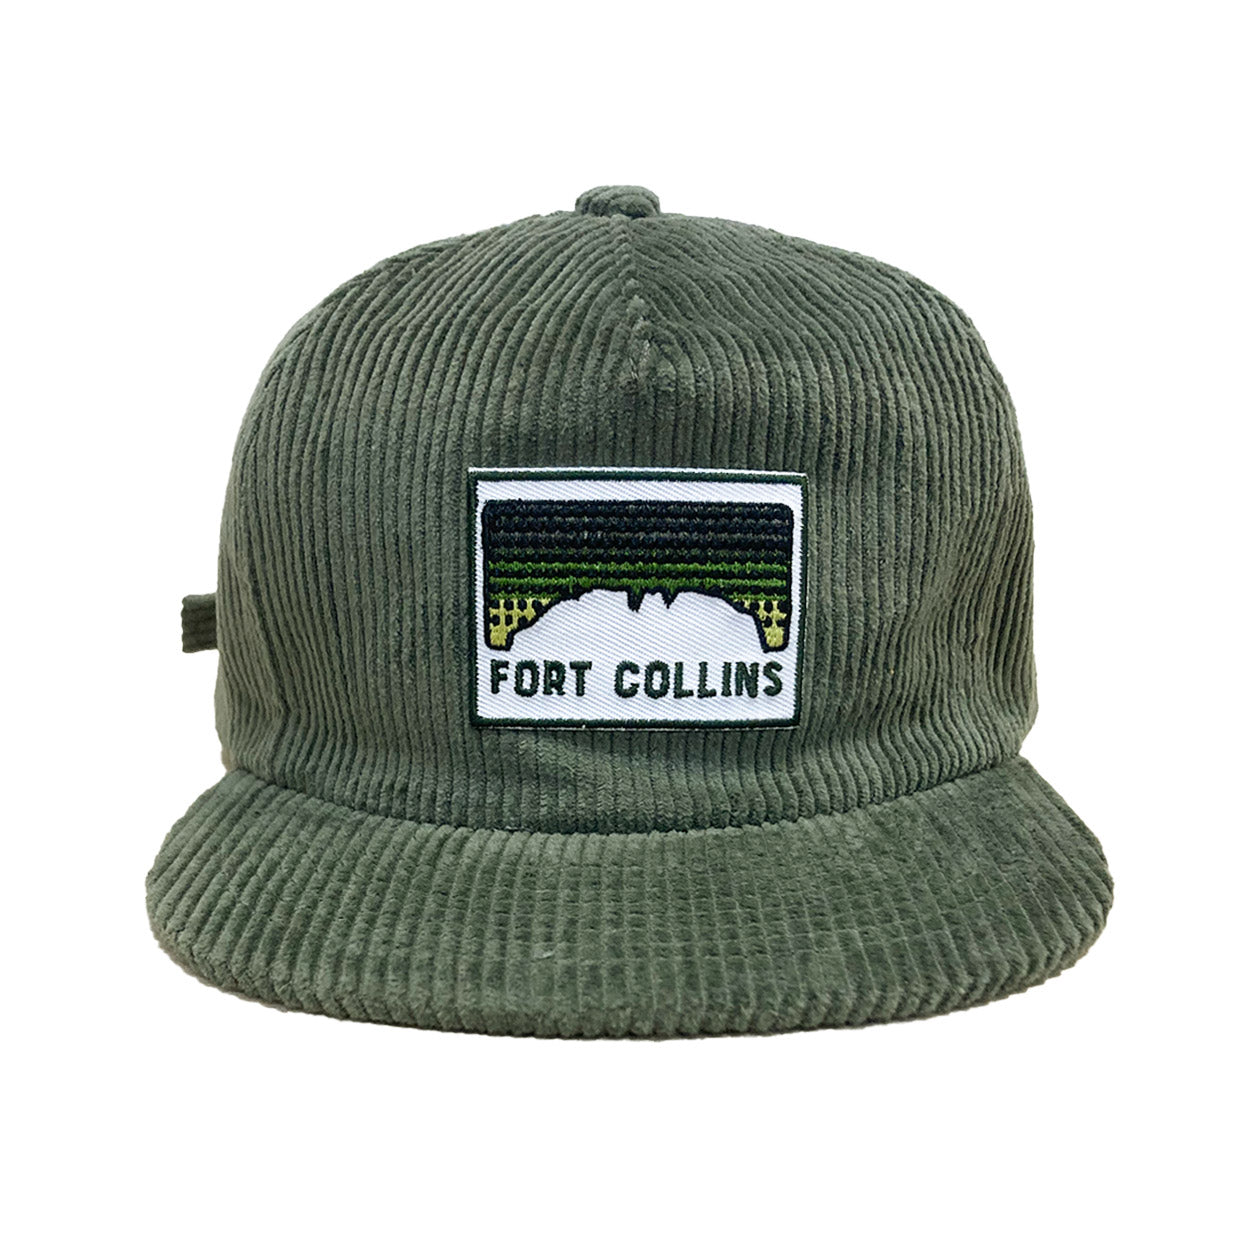 Fort Collins Sunset Corduroy Hat